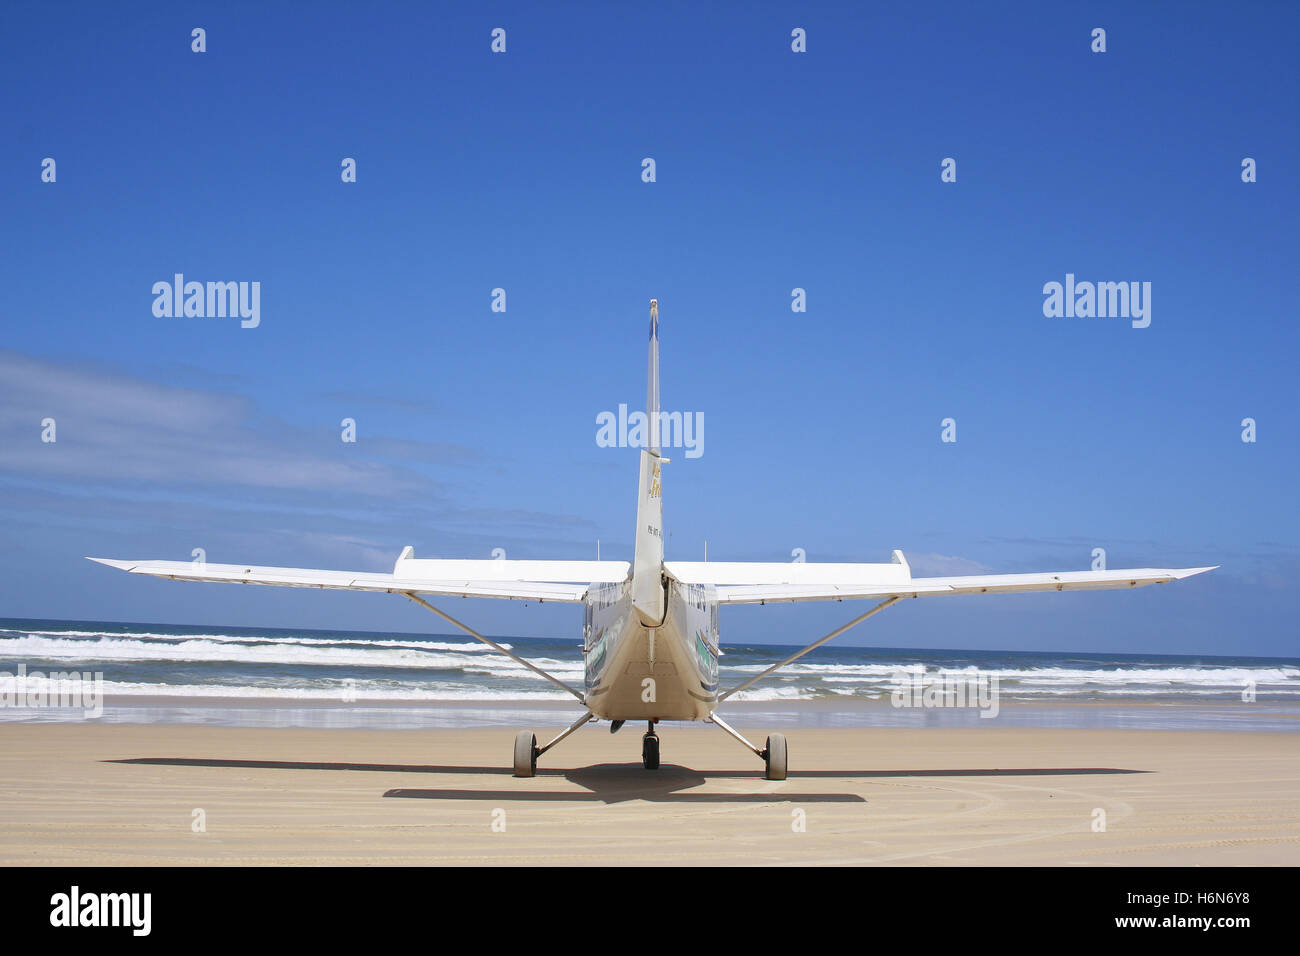 island aircraft Stock Photo